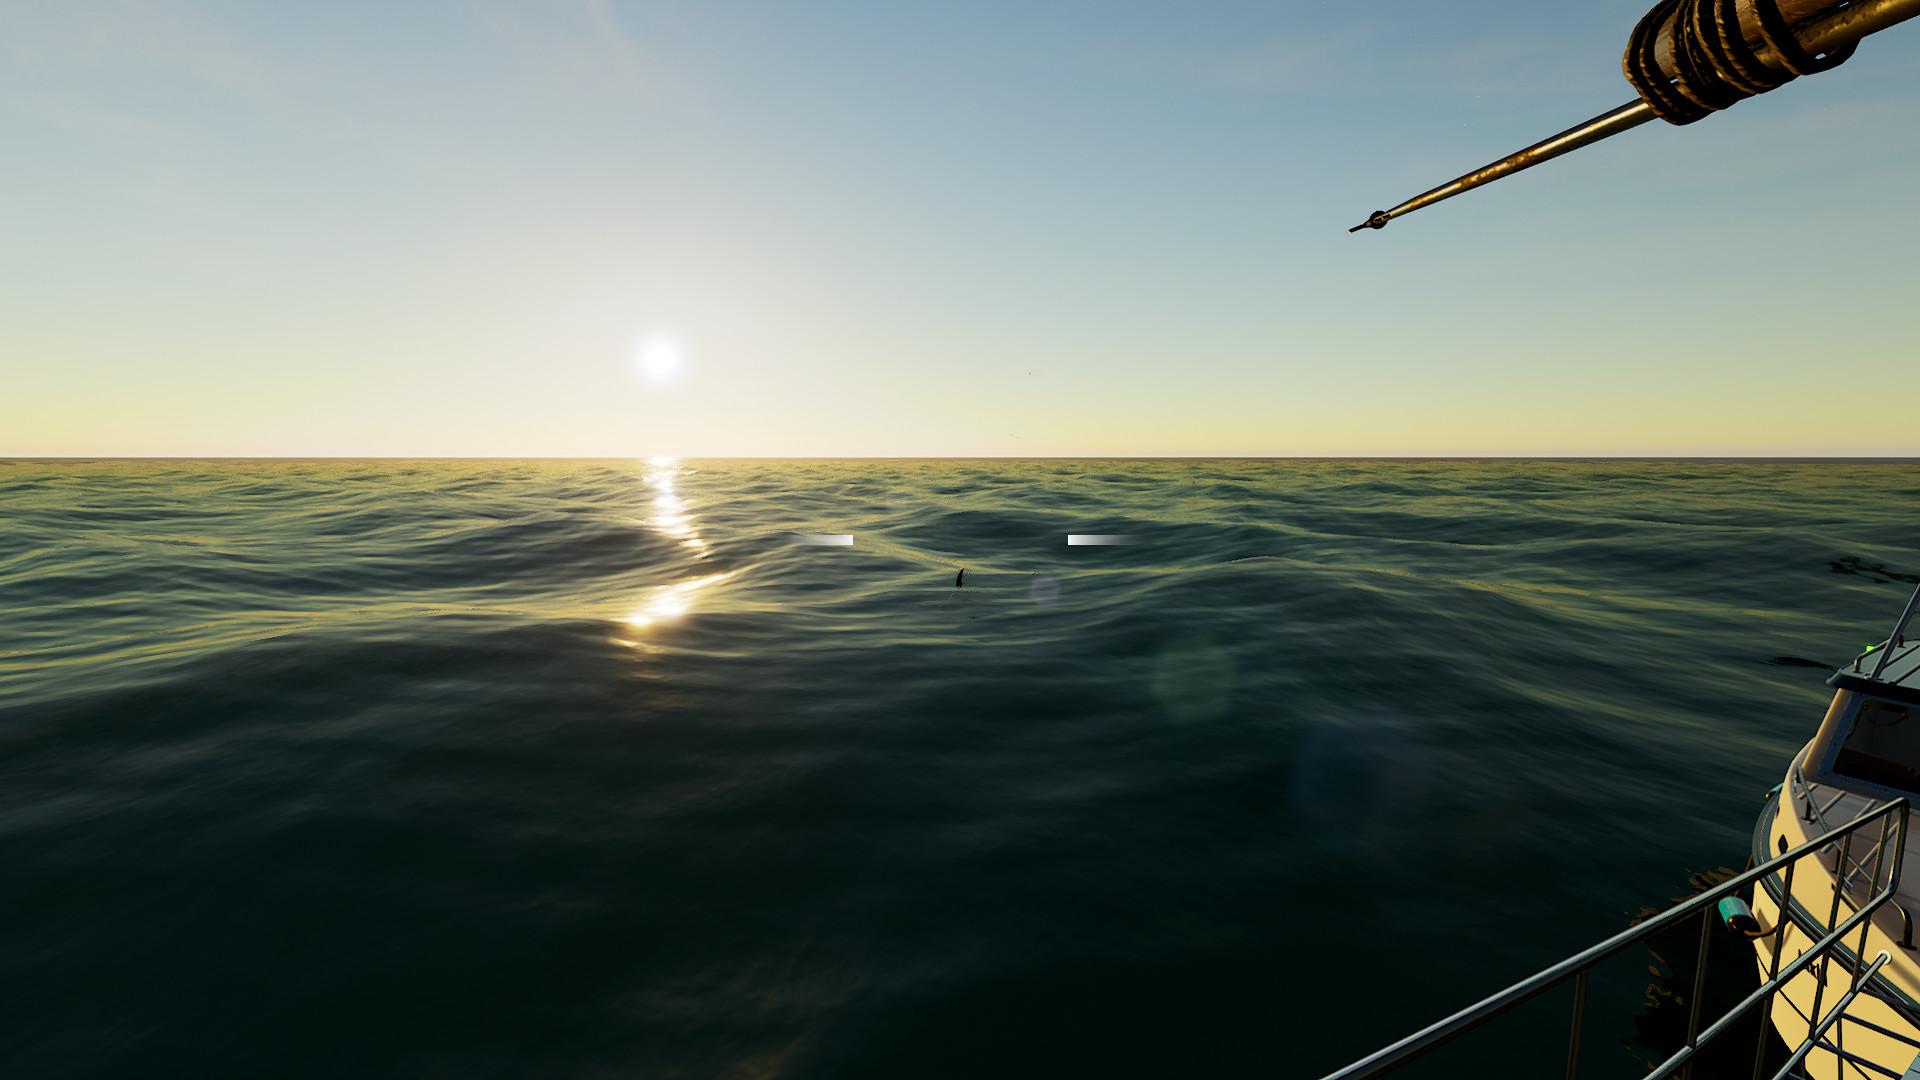 Screenshot №6 from game Fishing: North Atlantic - Enhanced Edition